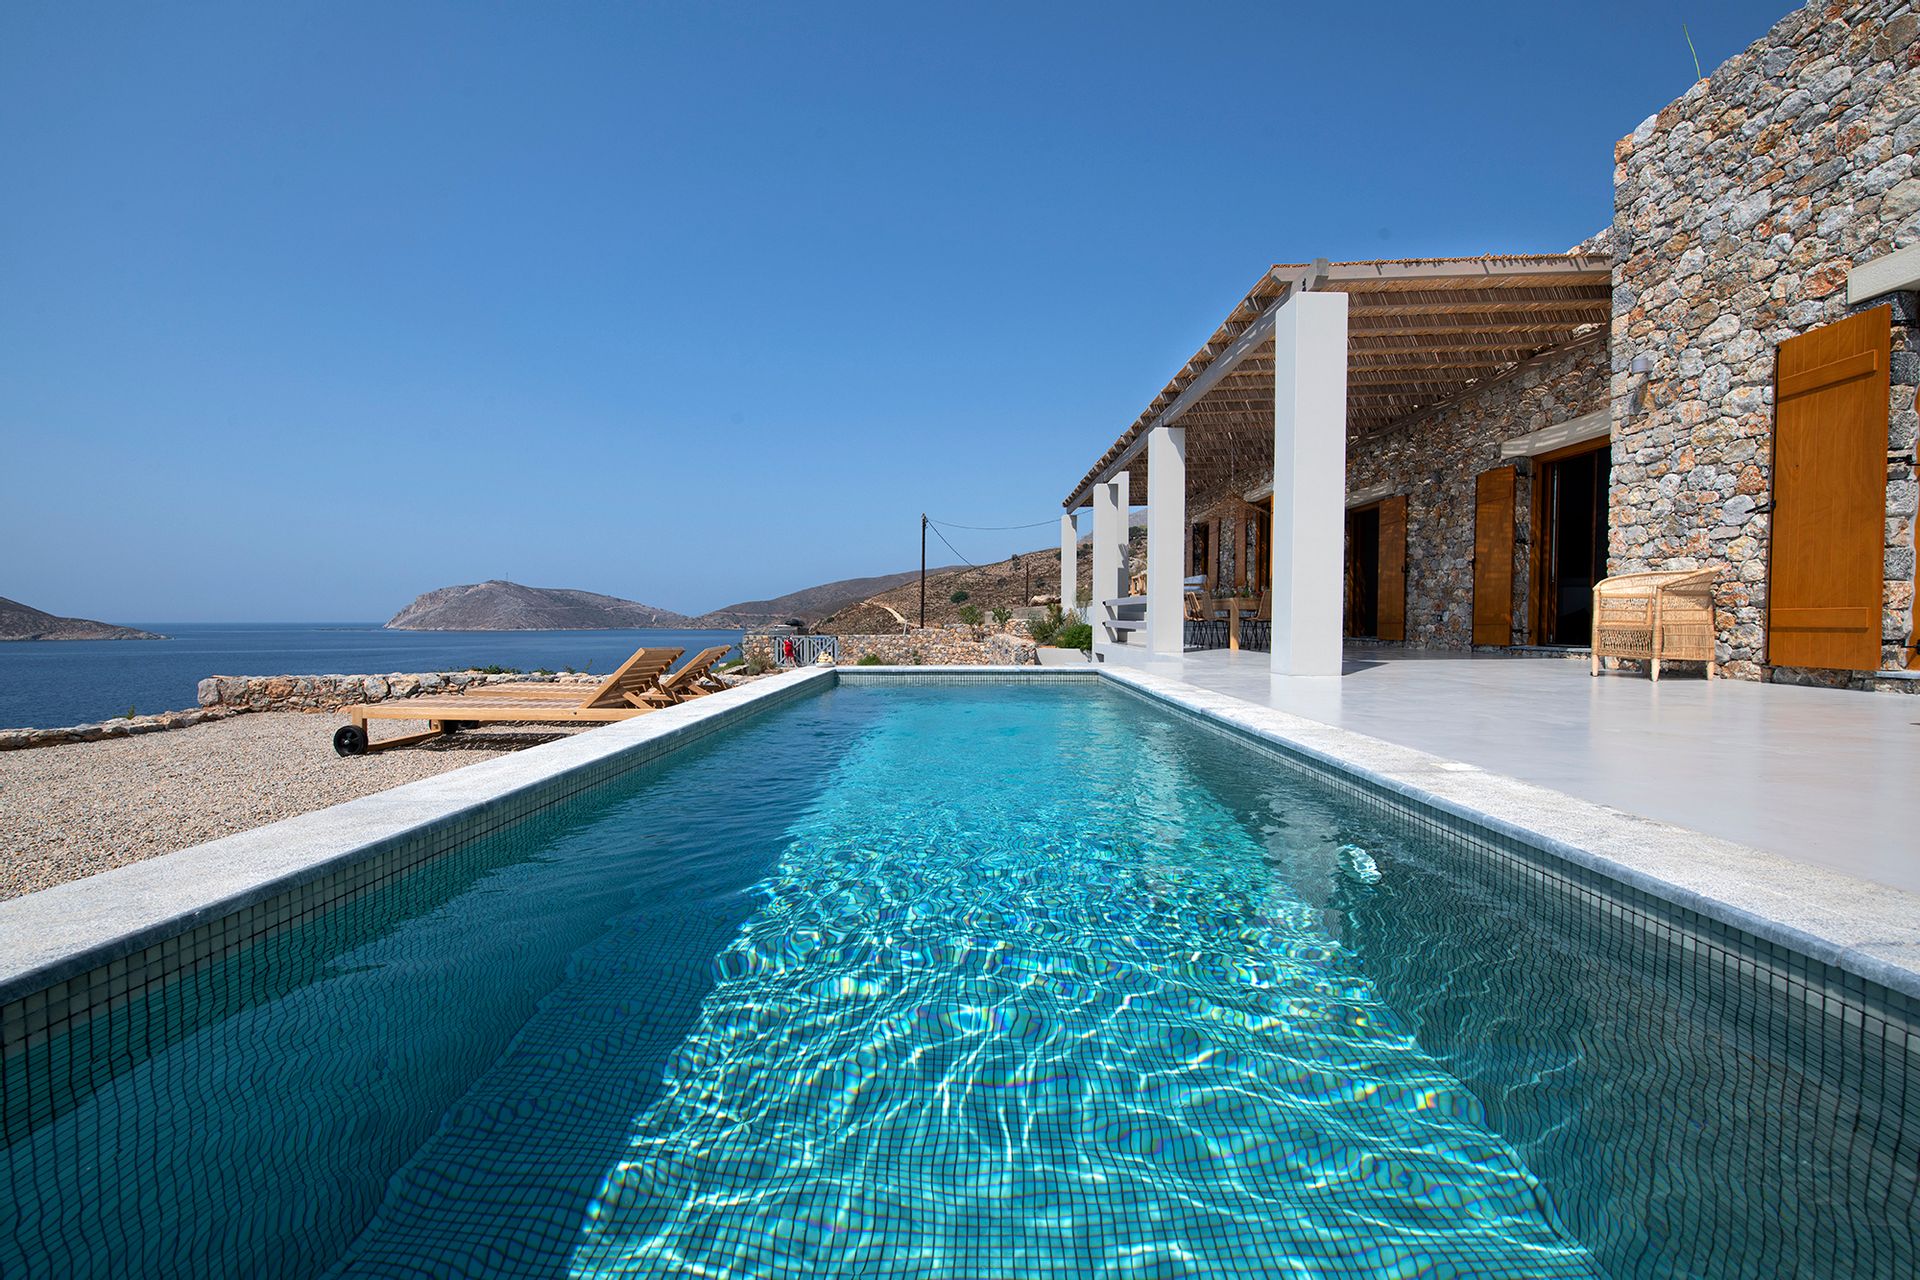 K 2 The Ultimate Villa by Stay in Kalymnos - Σκάλια, Κάλυμνος ✦ 2 Ημέρες (1 Διανυκτέρευση) ✦ 4 άτομα ✦ 1 ✦ 10/04/2022 έως 30/09/2022 ✦ Δίπλα στην παραλία!